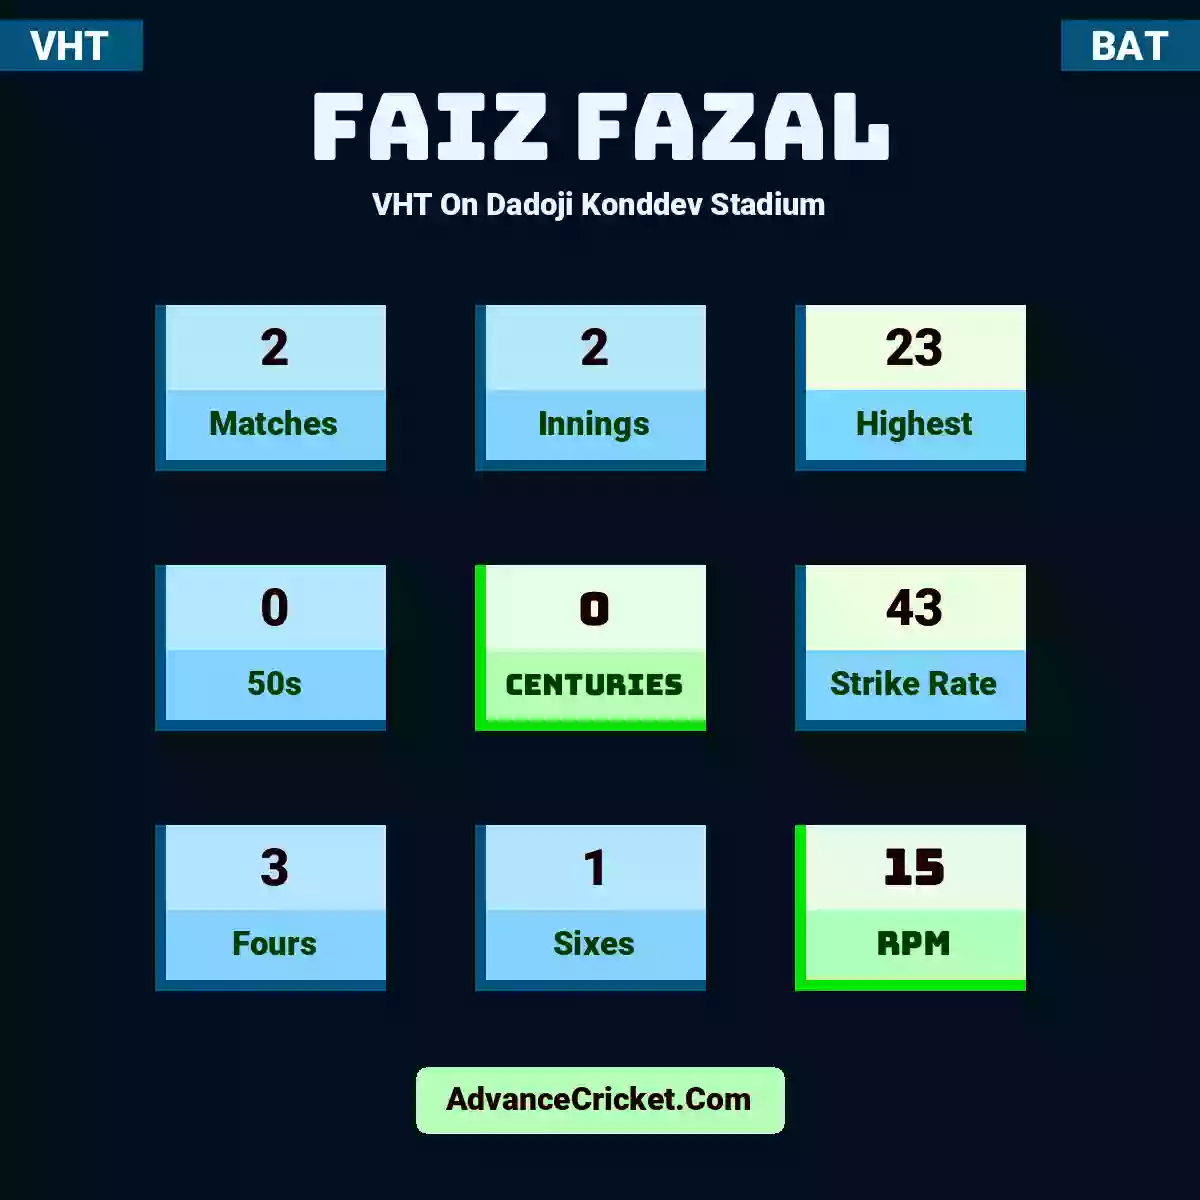 Faiz Fazal VHT  On Dadoji Konddev Stadium, Faiz Fazal played 2 matches, scored 23 runs as highest, 0 half-centuries, and 0 centuries, with a strike rate of 43. F.Fazal hit 3 fours and 1 sixes, with an RPM of 15.